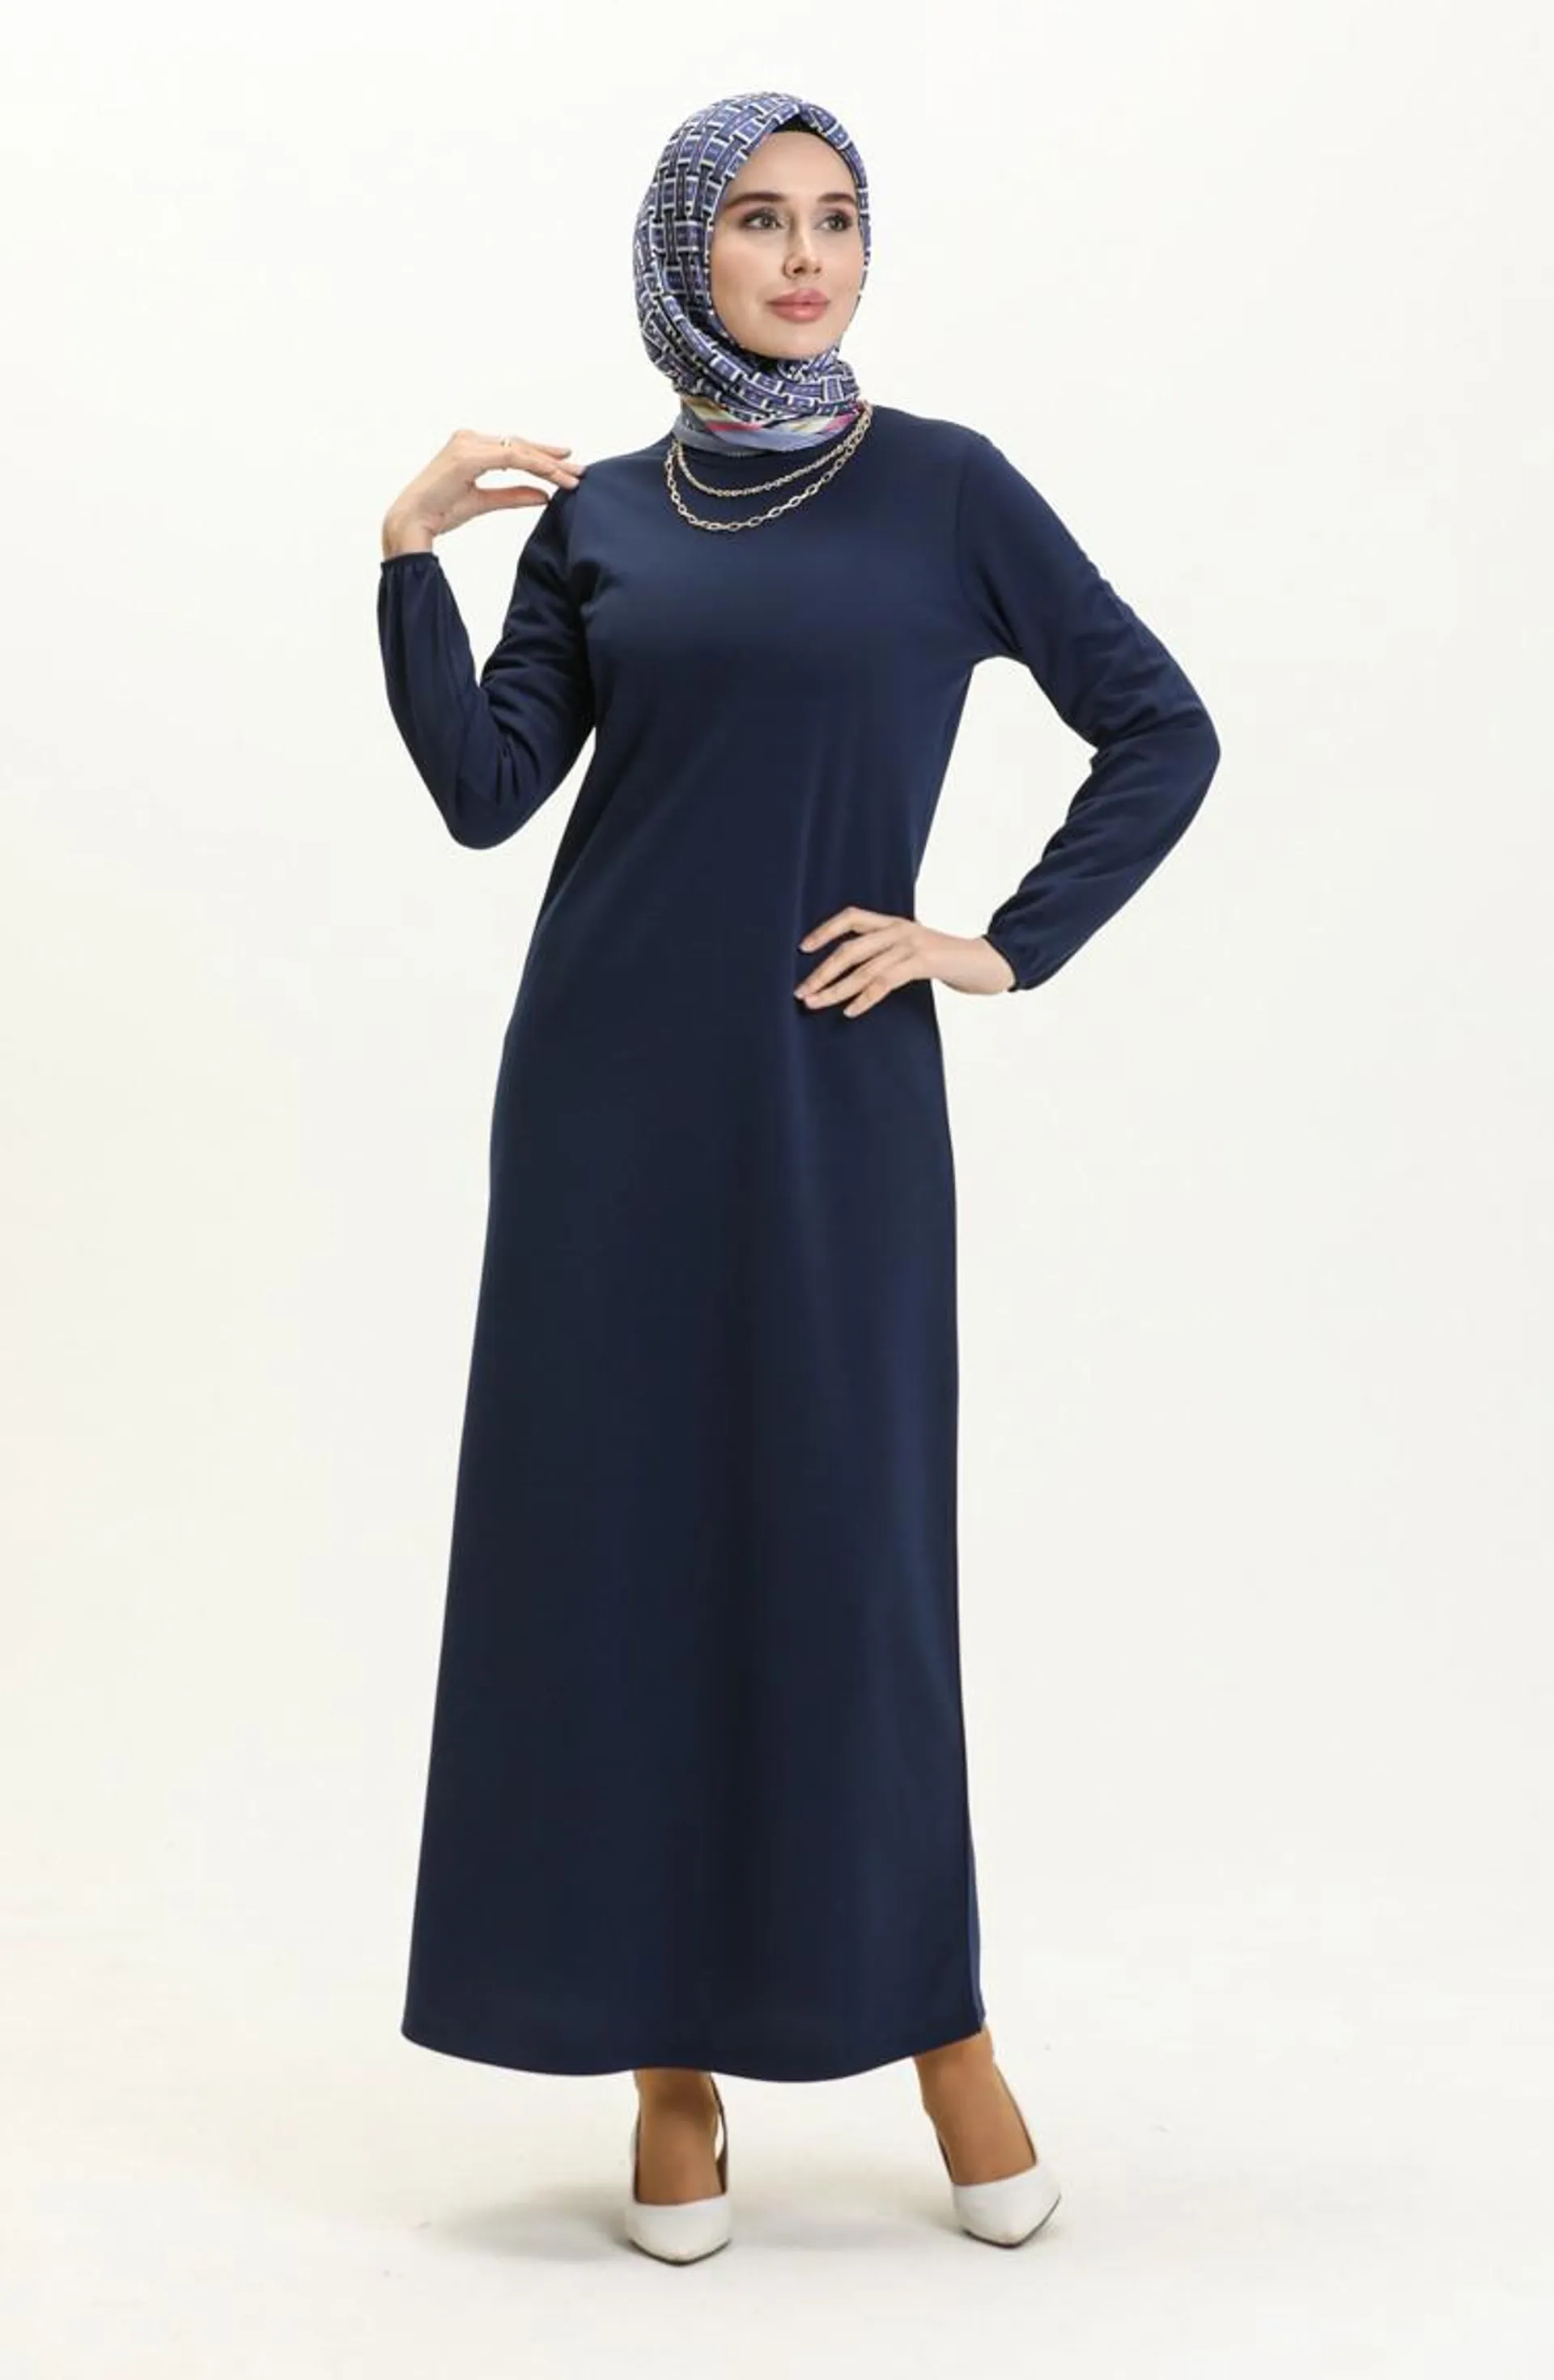 Elastic Sleeve Basic Hijab Dress 4158-01 Navy Blue 4158-01